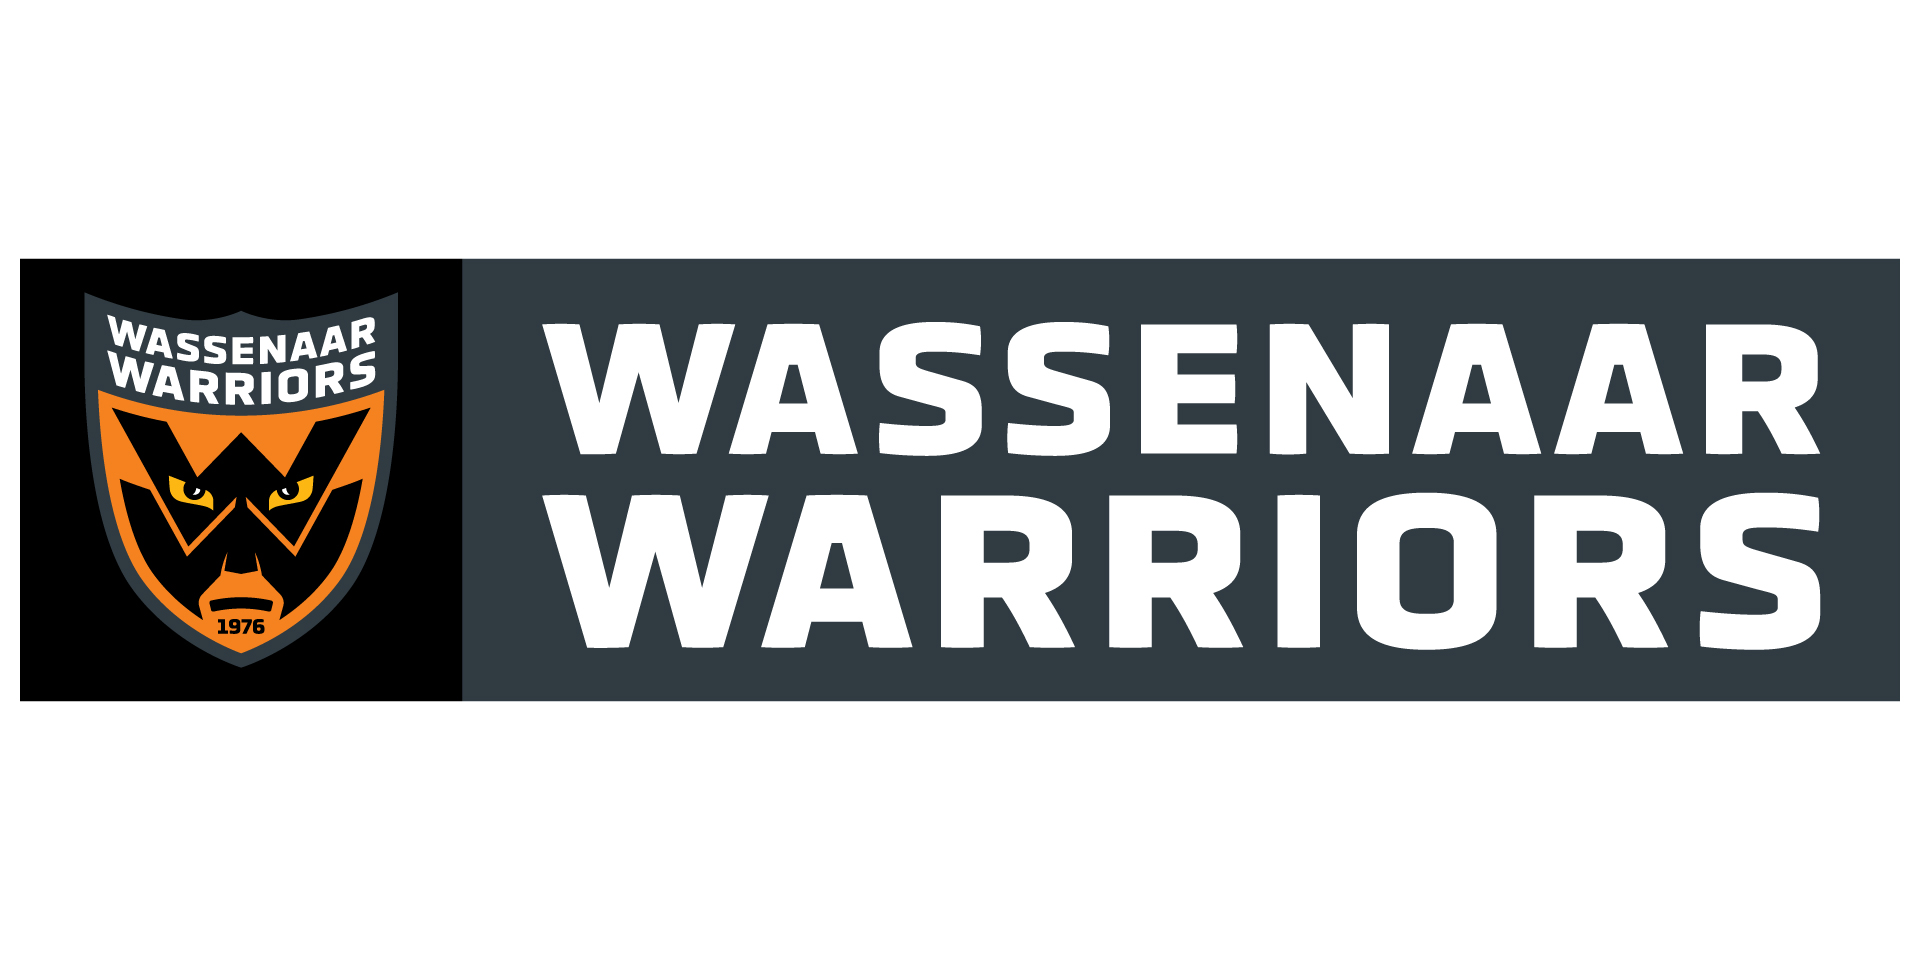 Wassenaar Warriors International Rugby Club